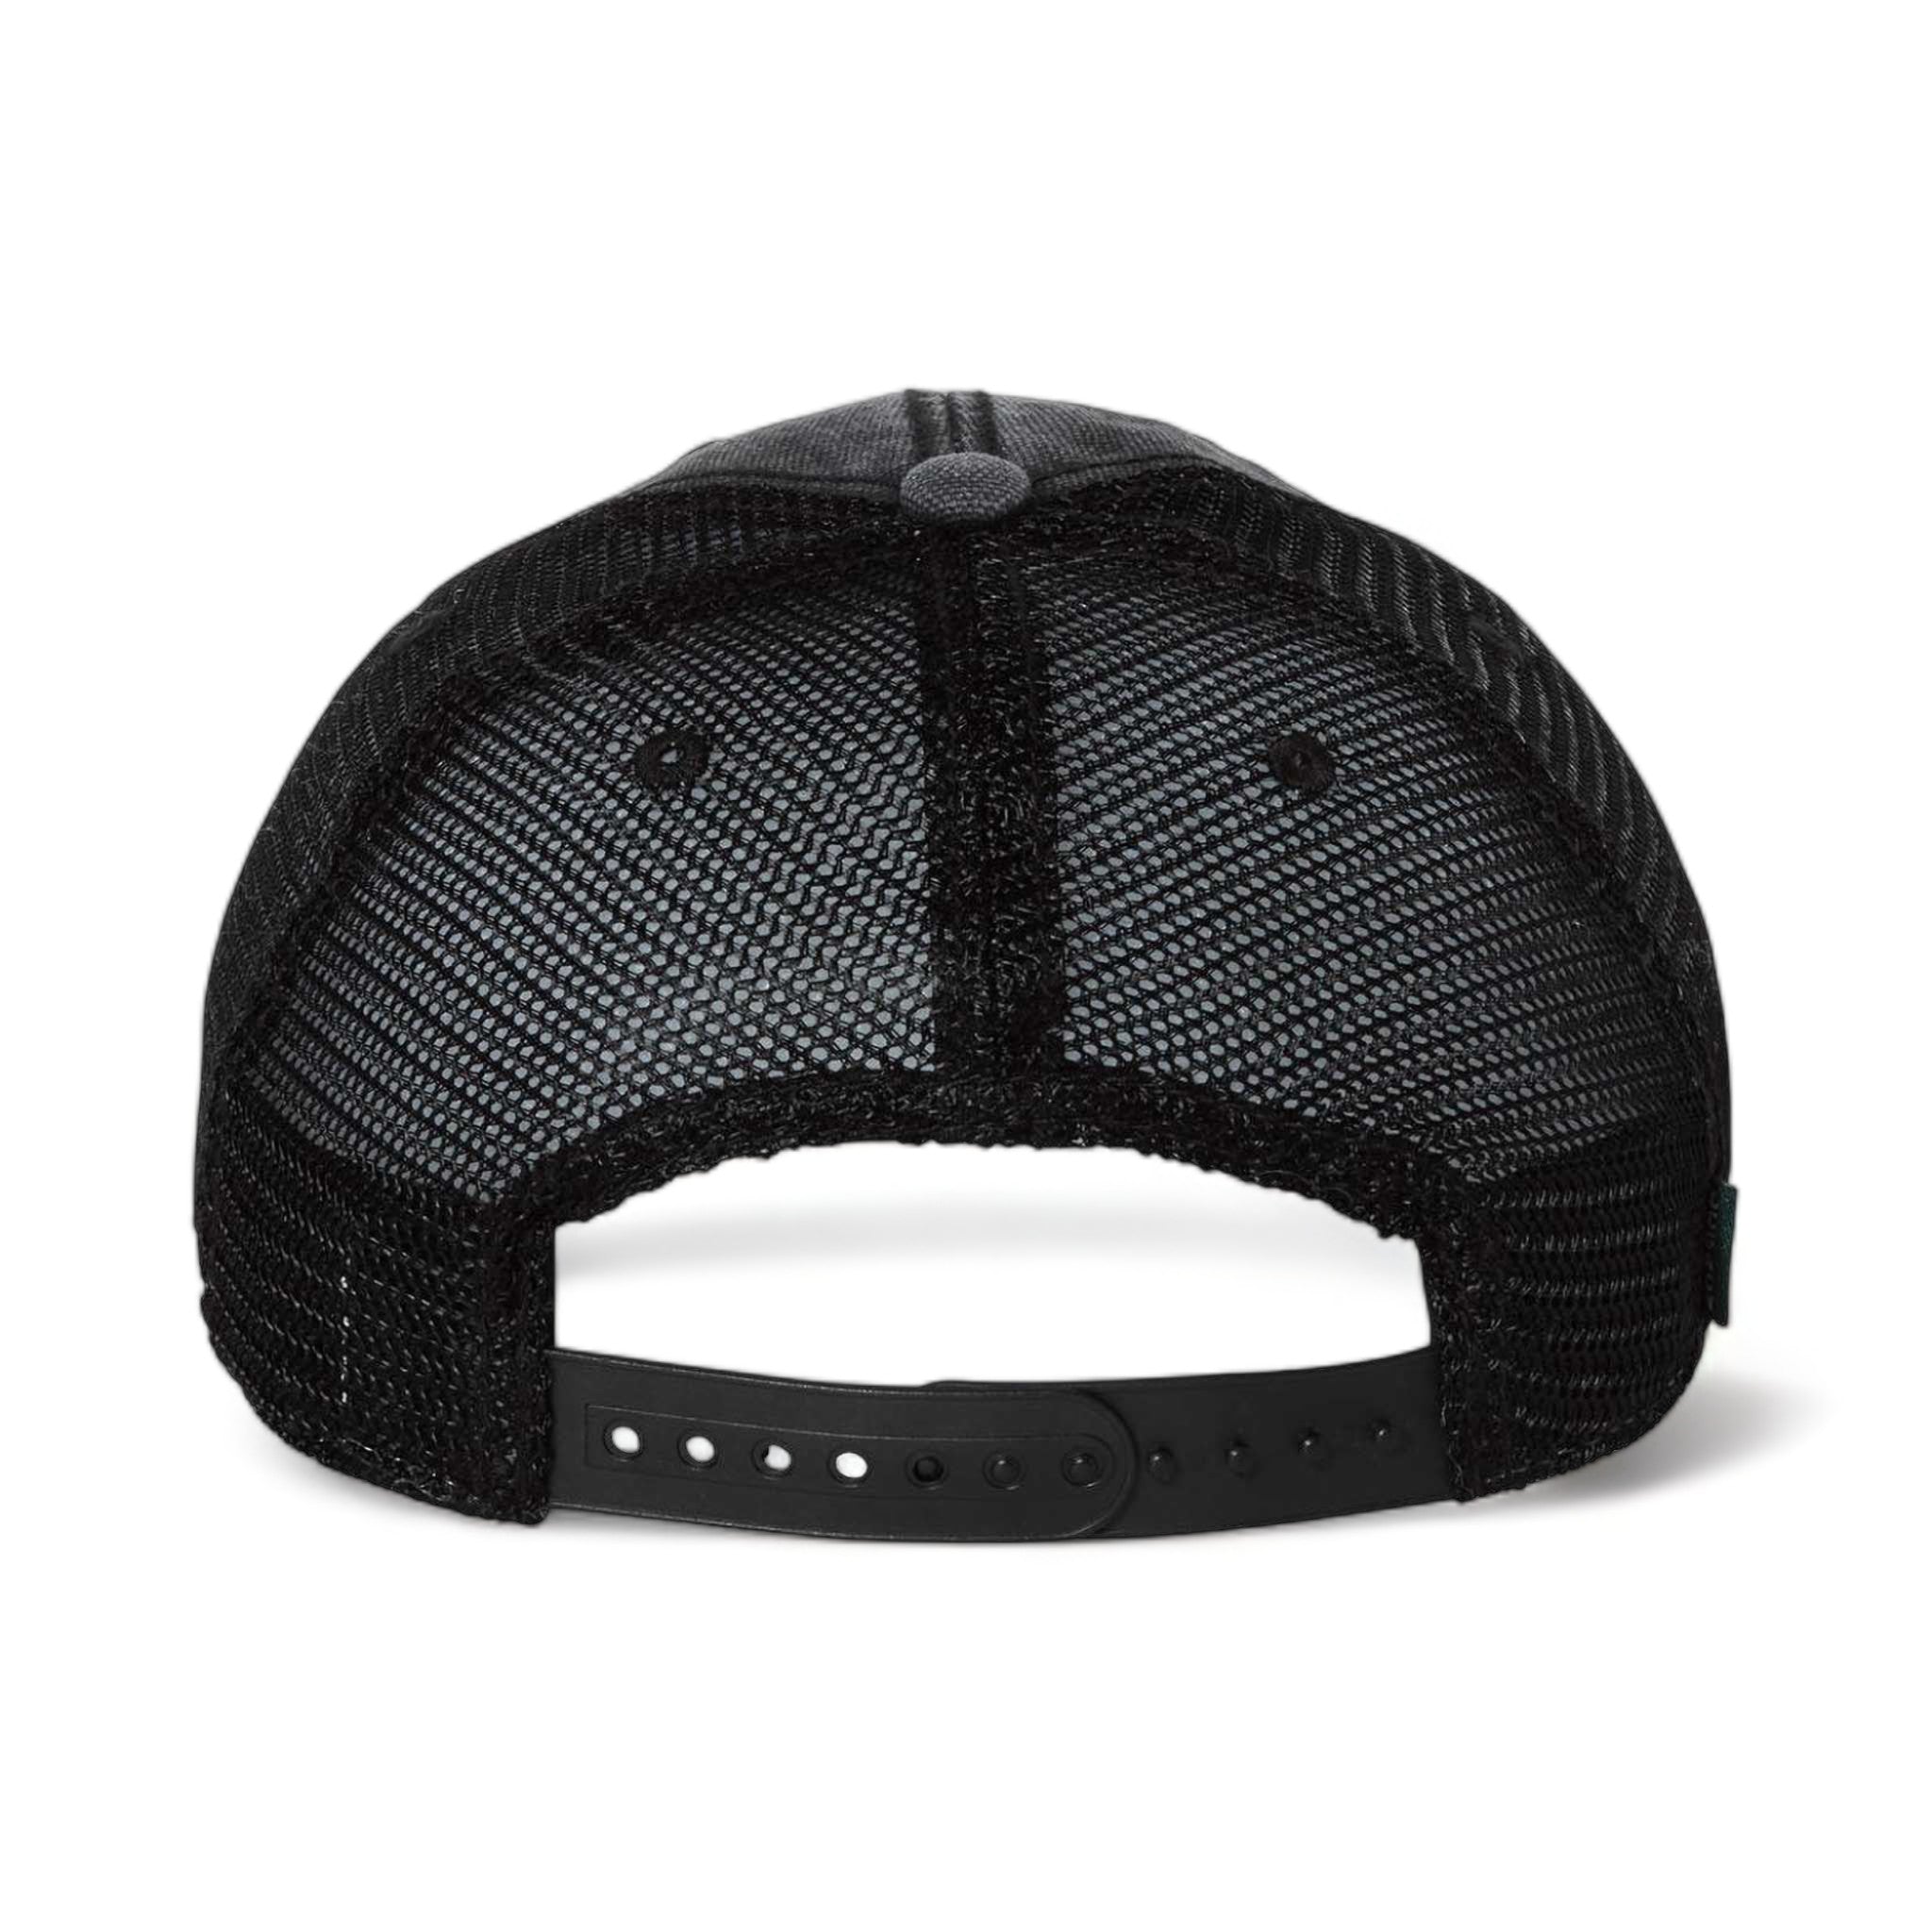 Back view of LEGACY DTA custom hat in black